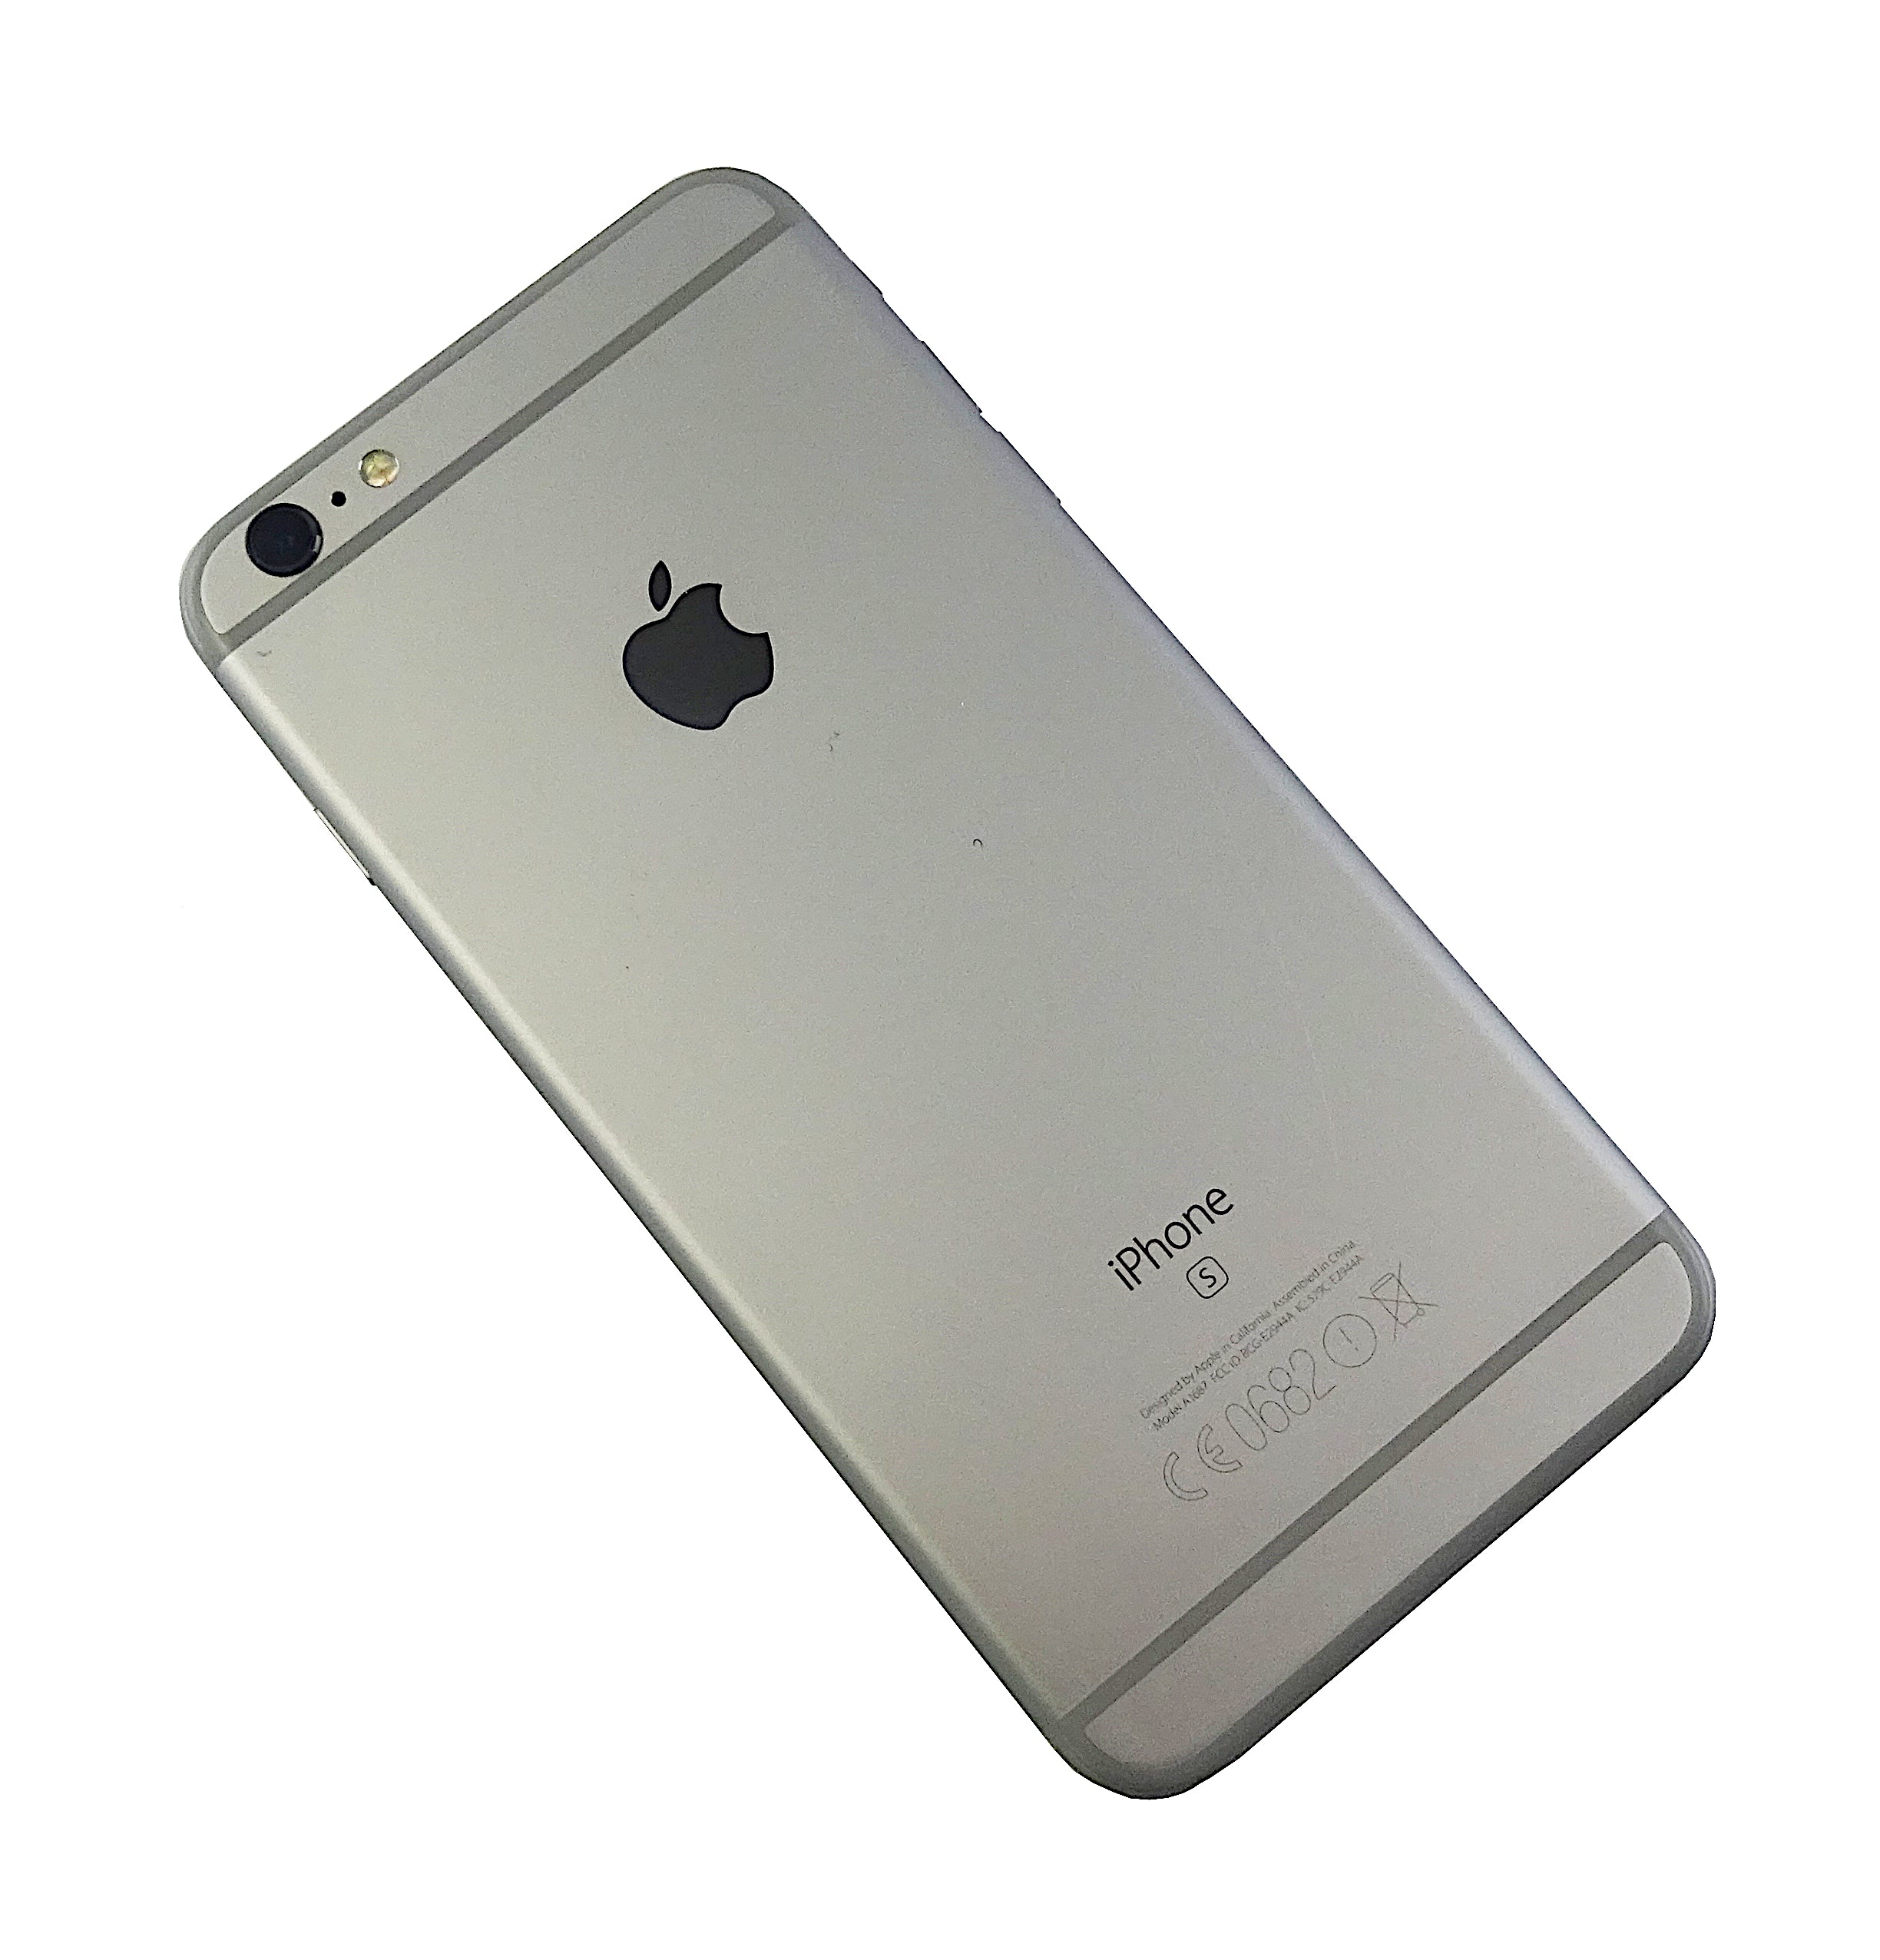 Apple iPhone 6S Plus Smartphone, 64GB, Unlocked, Space Grey, A1687